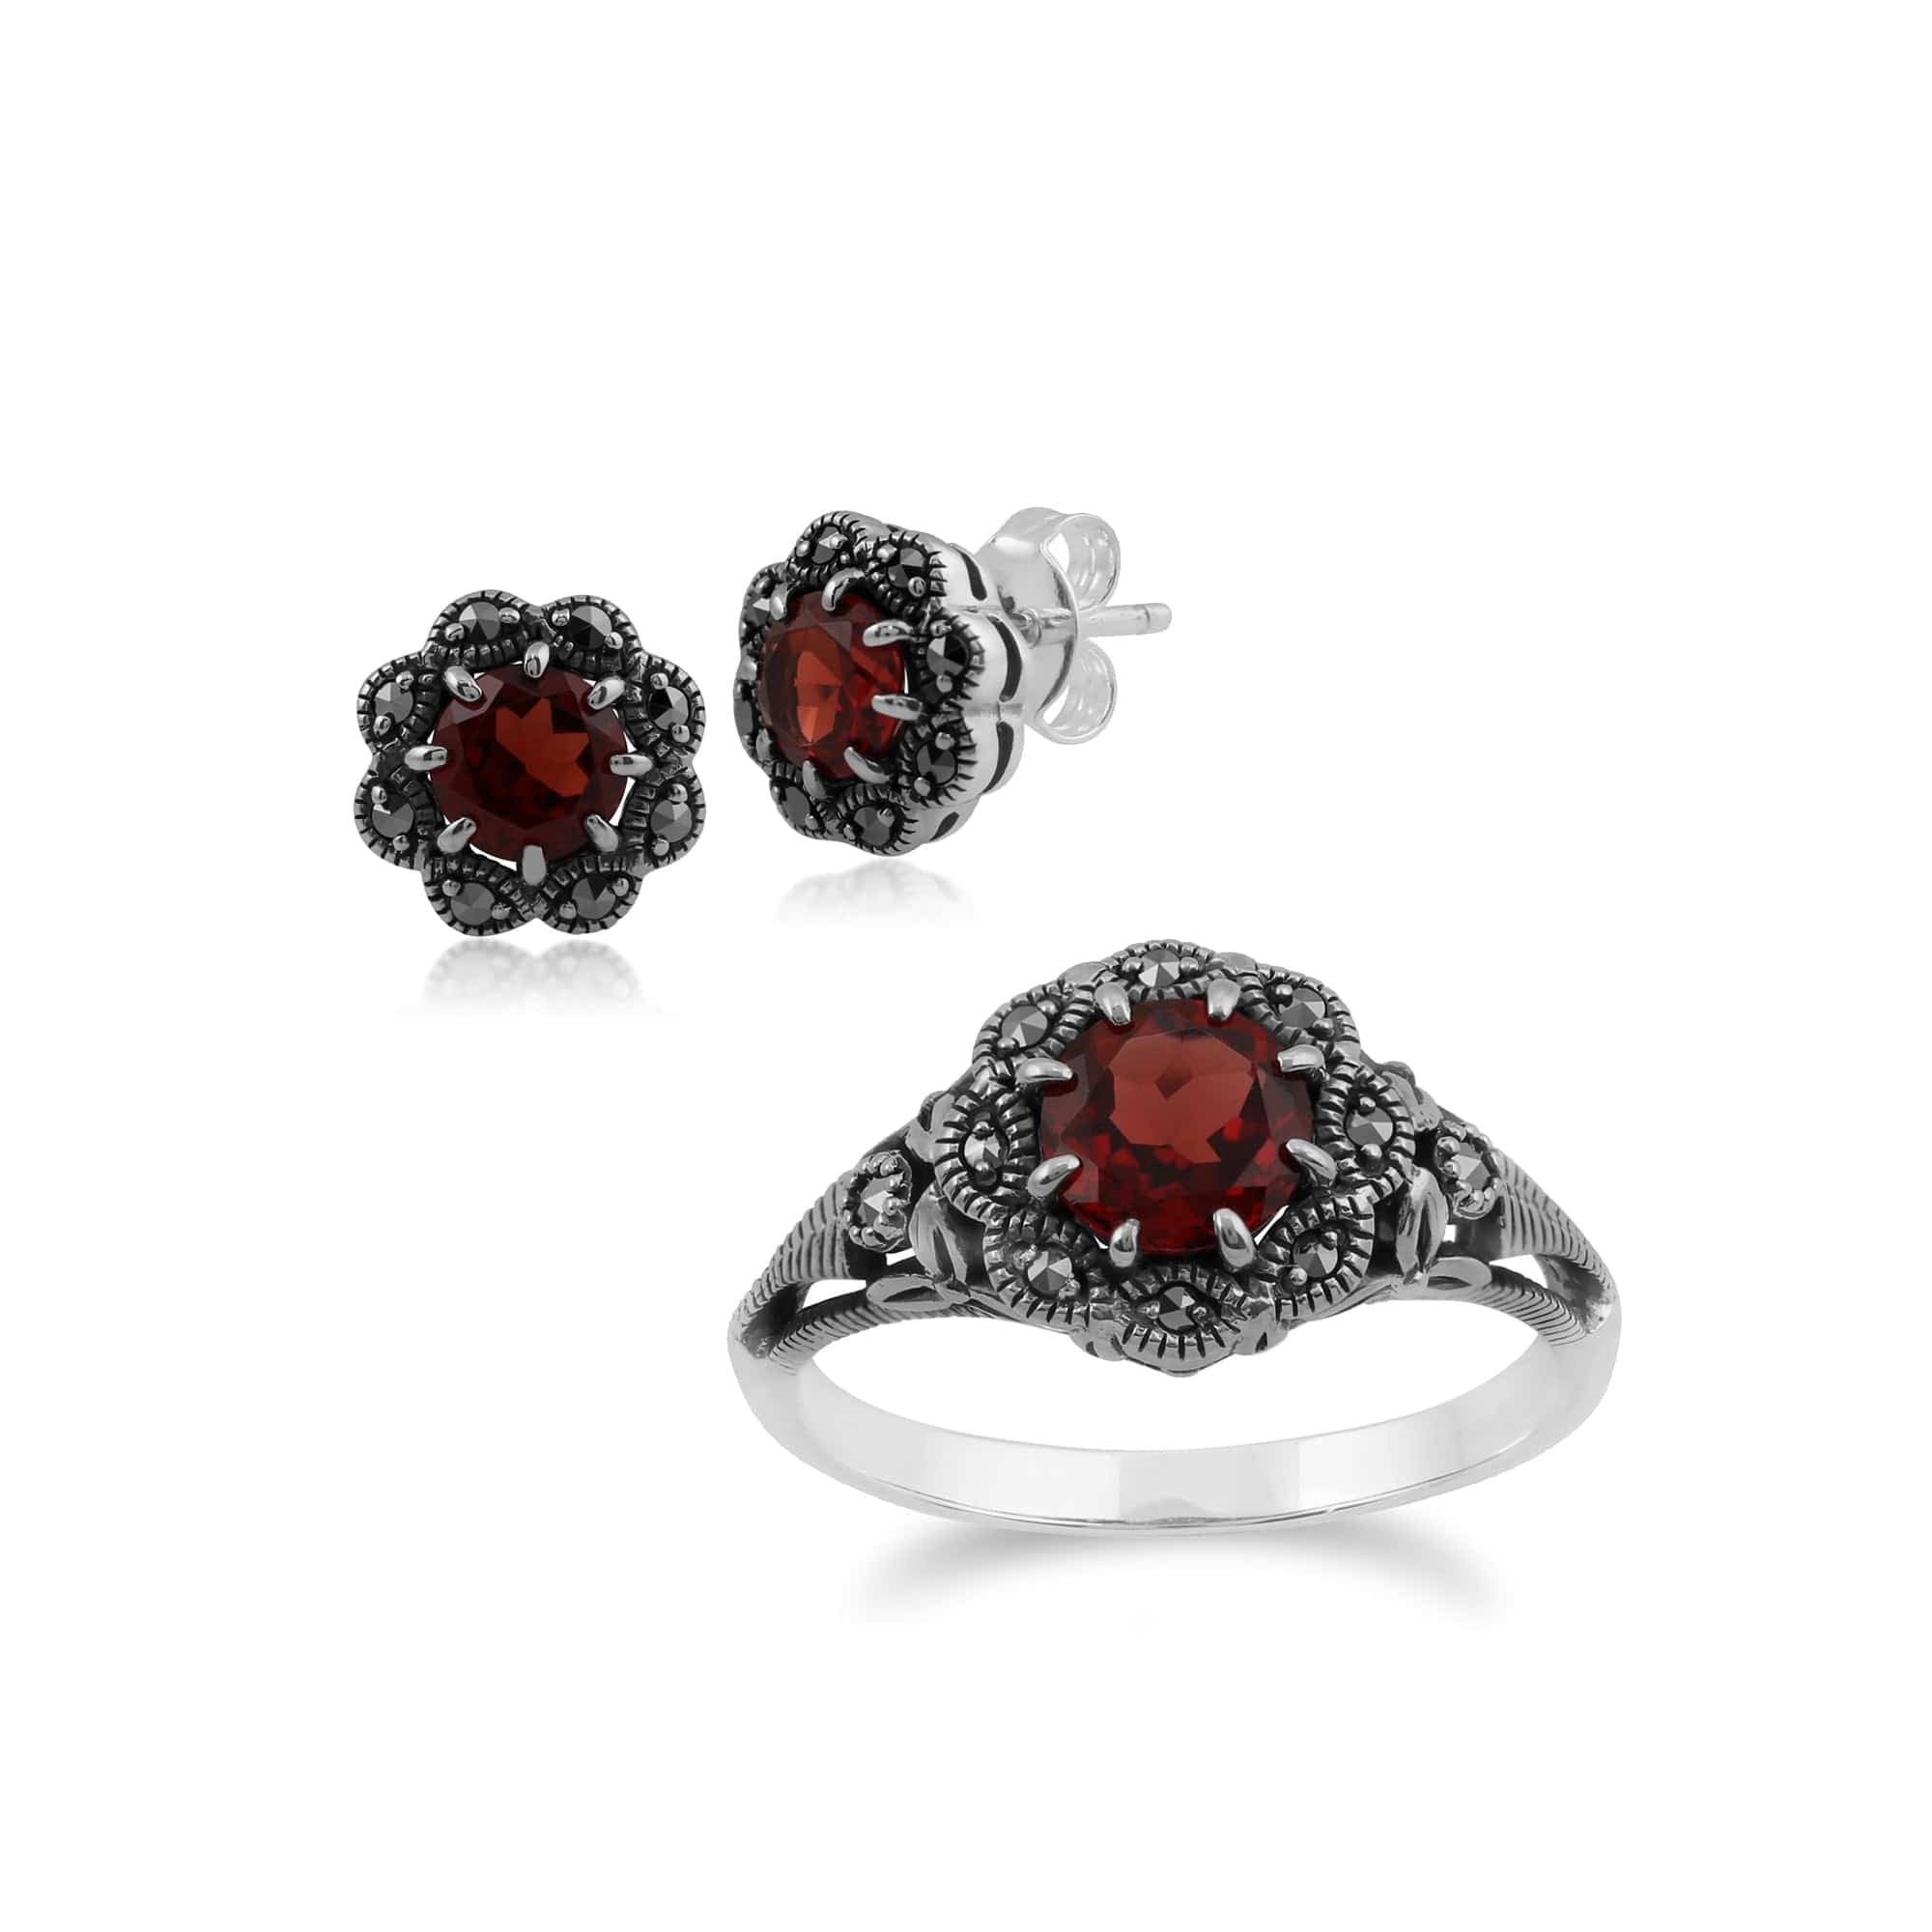 Art Nouveau Style Round Garnet & Marcasite Floral Stud Earrings & Ring Set in 925 Sterling Silver - Gemondo